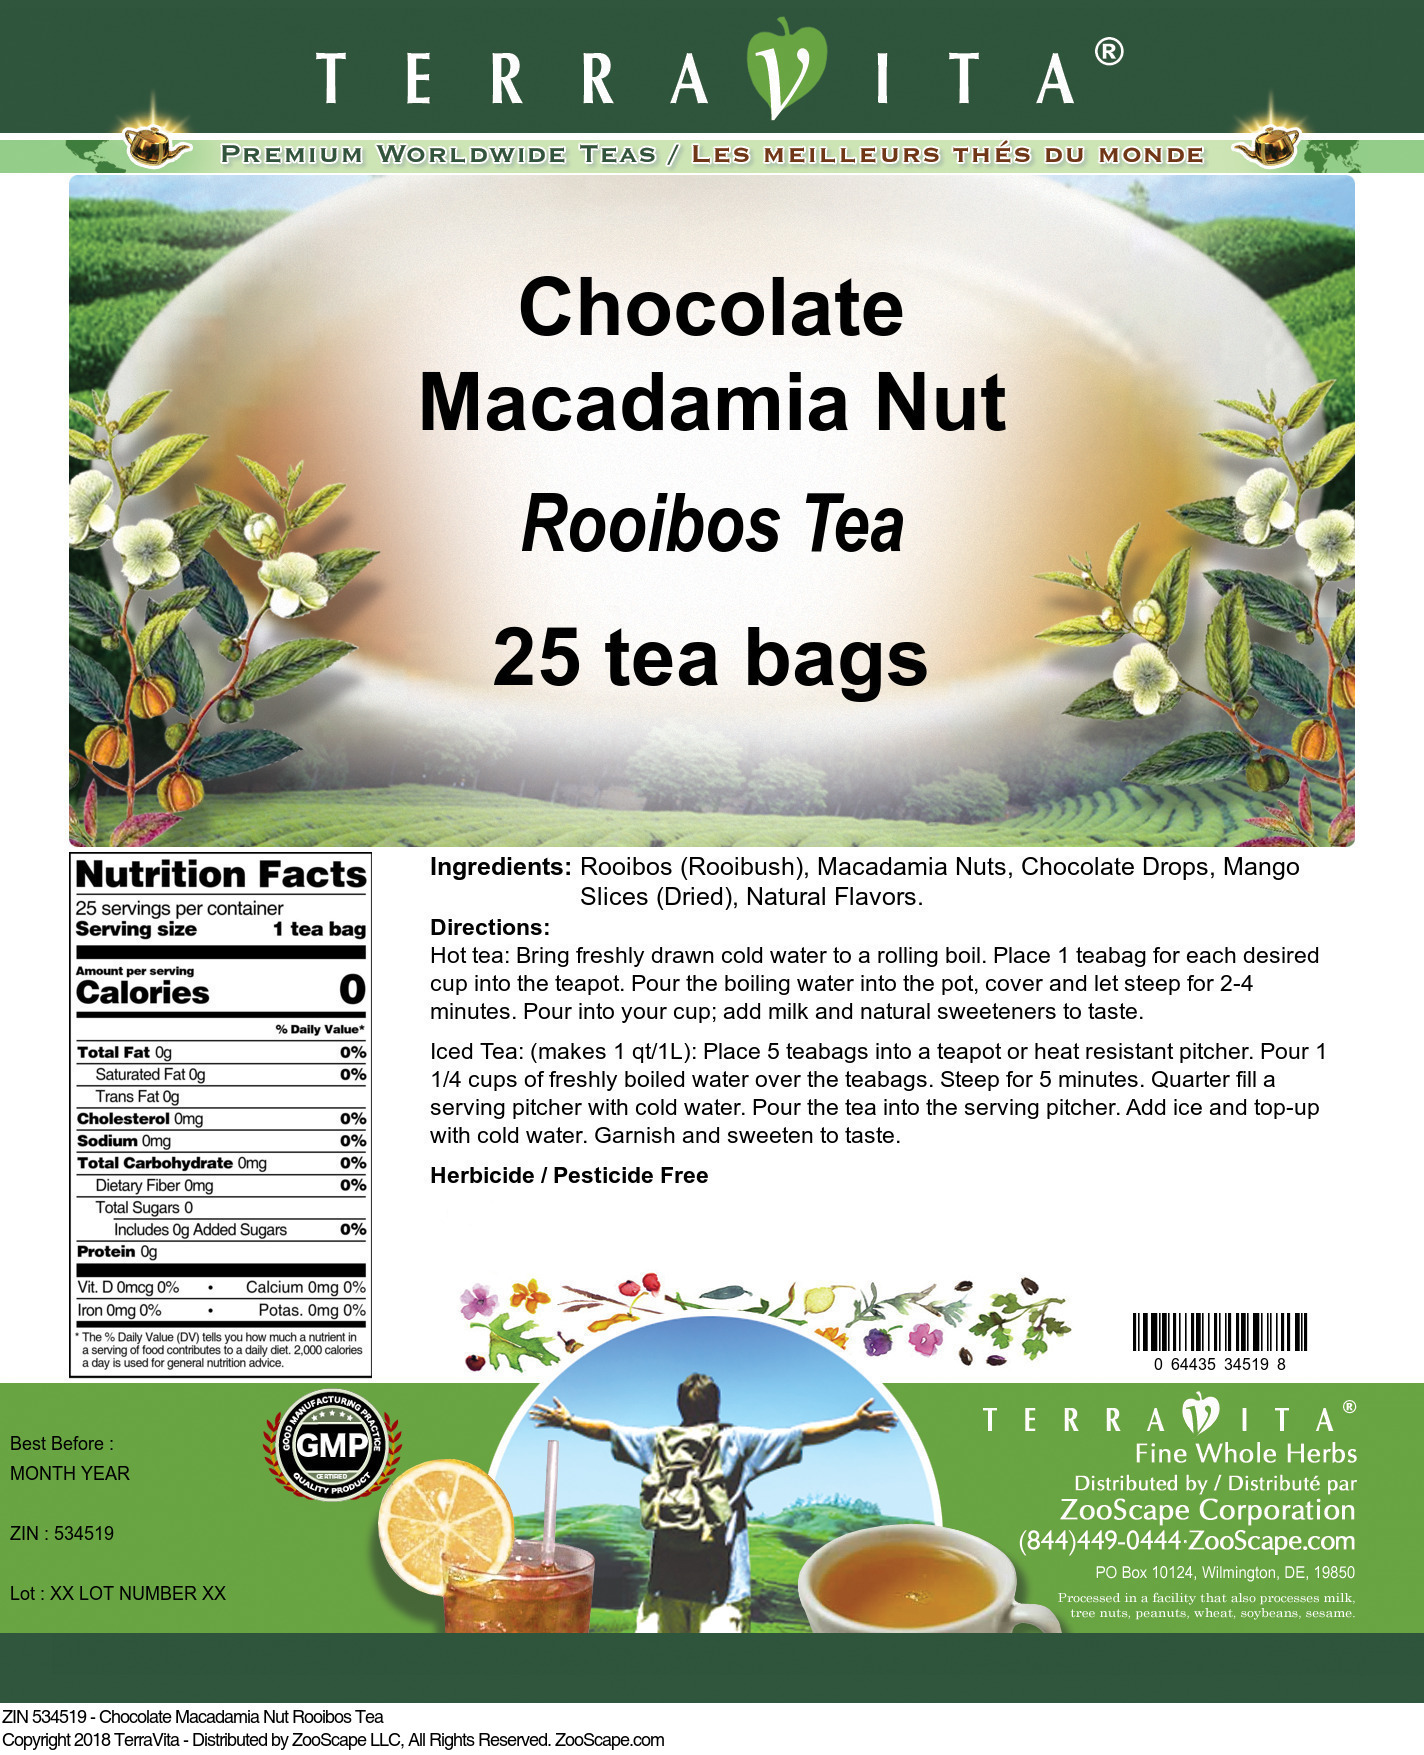 Chocolate Macadamia Nut Rooibos Tea - Label